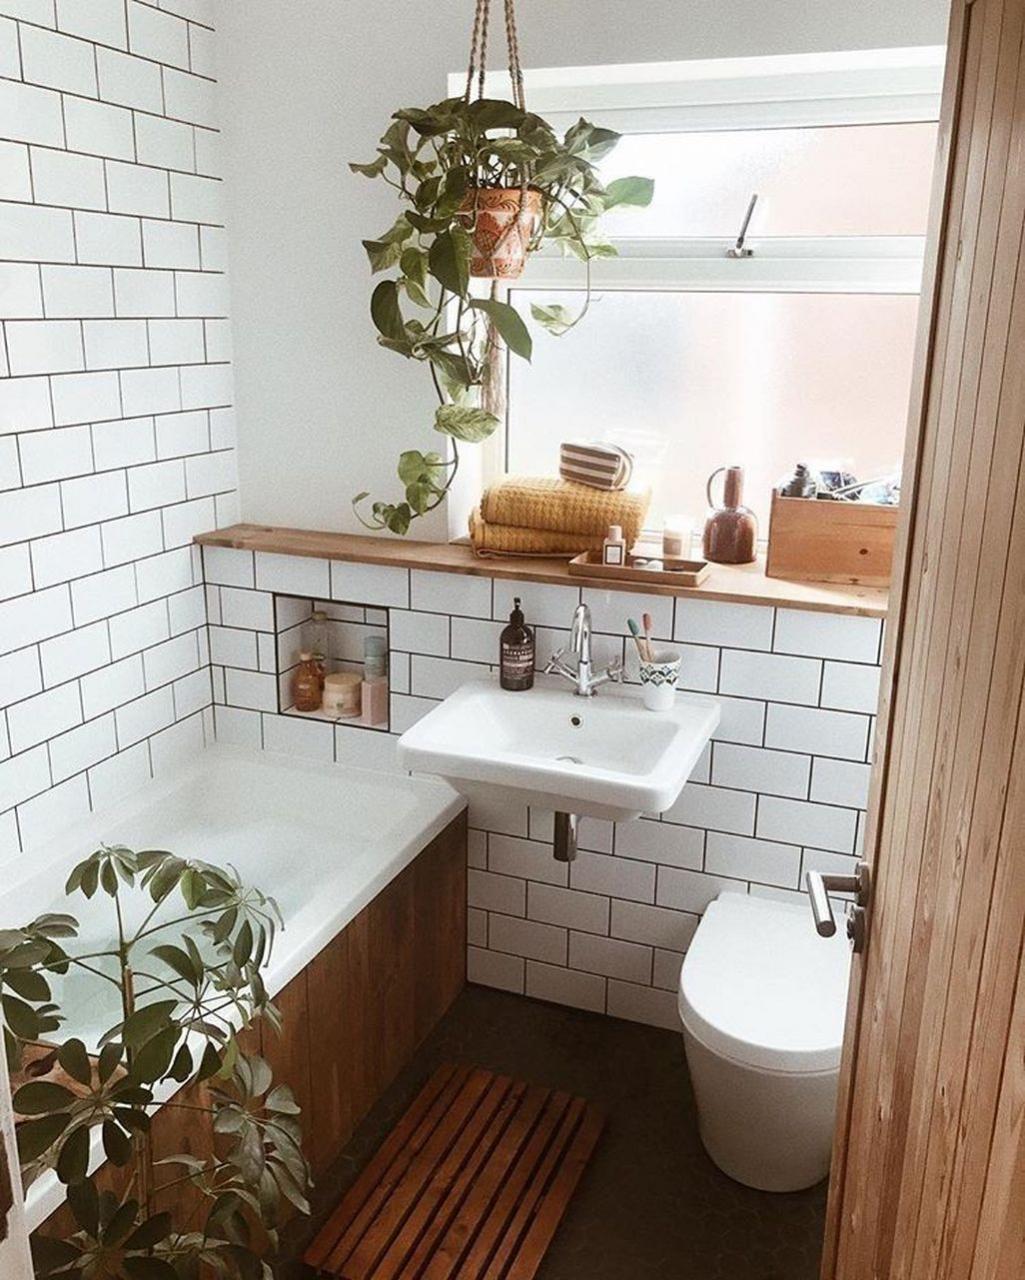 46 Rustic Small Bathroom Wood Decor Design Will Inspire Bathroom